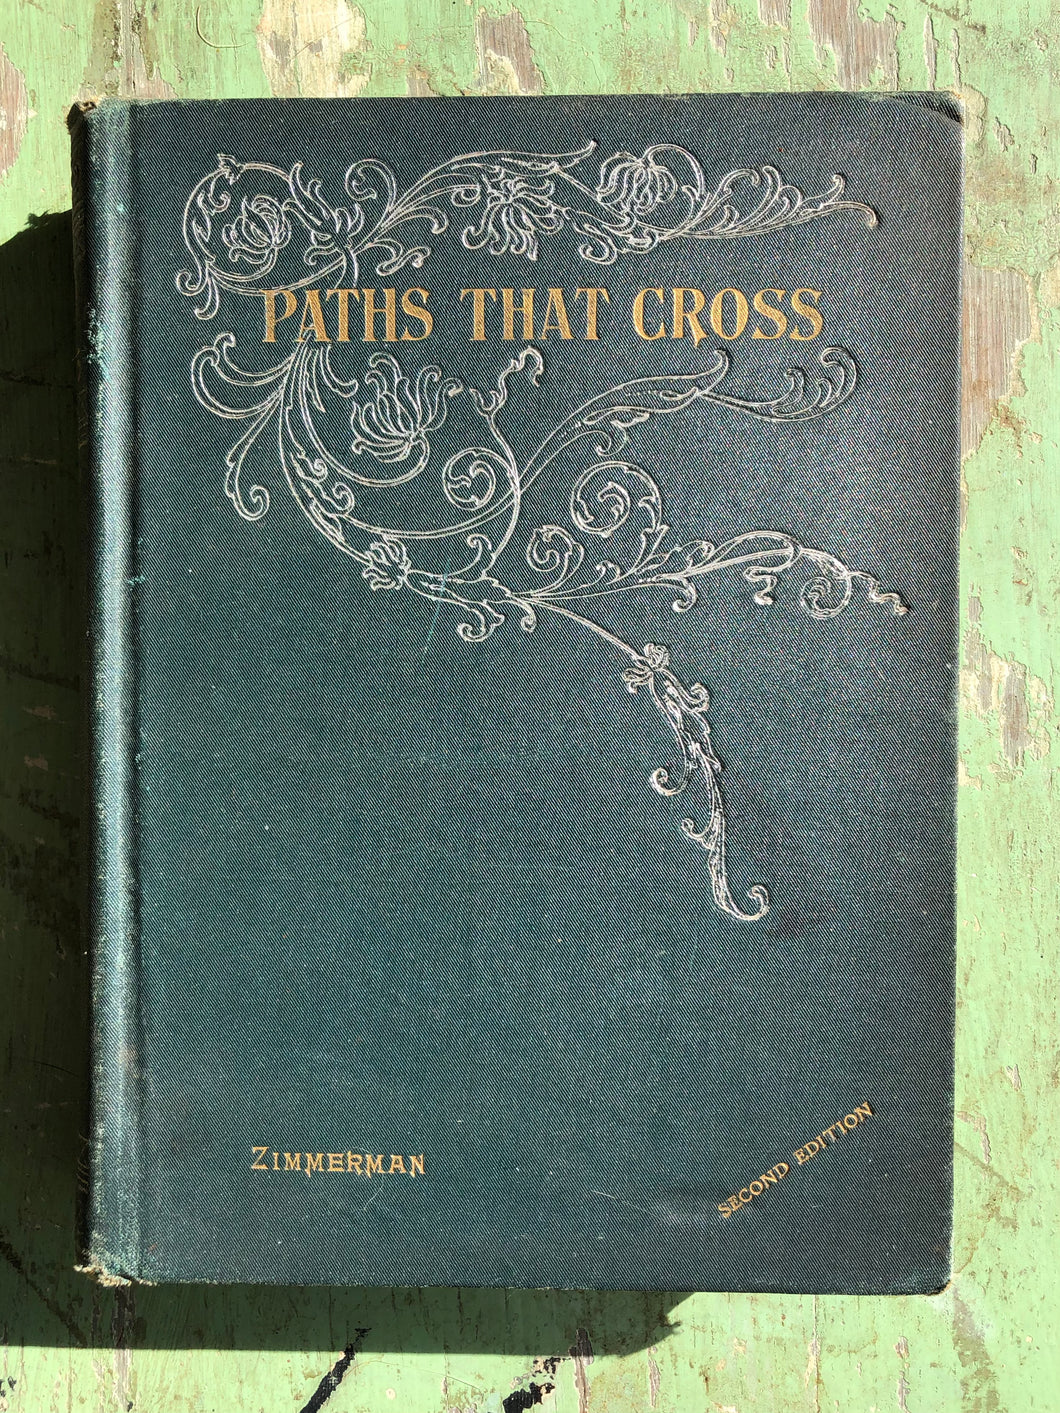 Paths That Cross by the Rev. L. M. Zimmerman